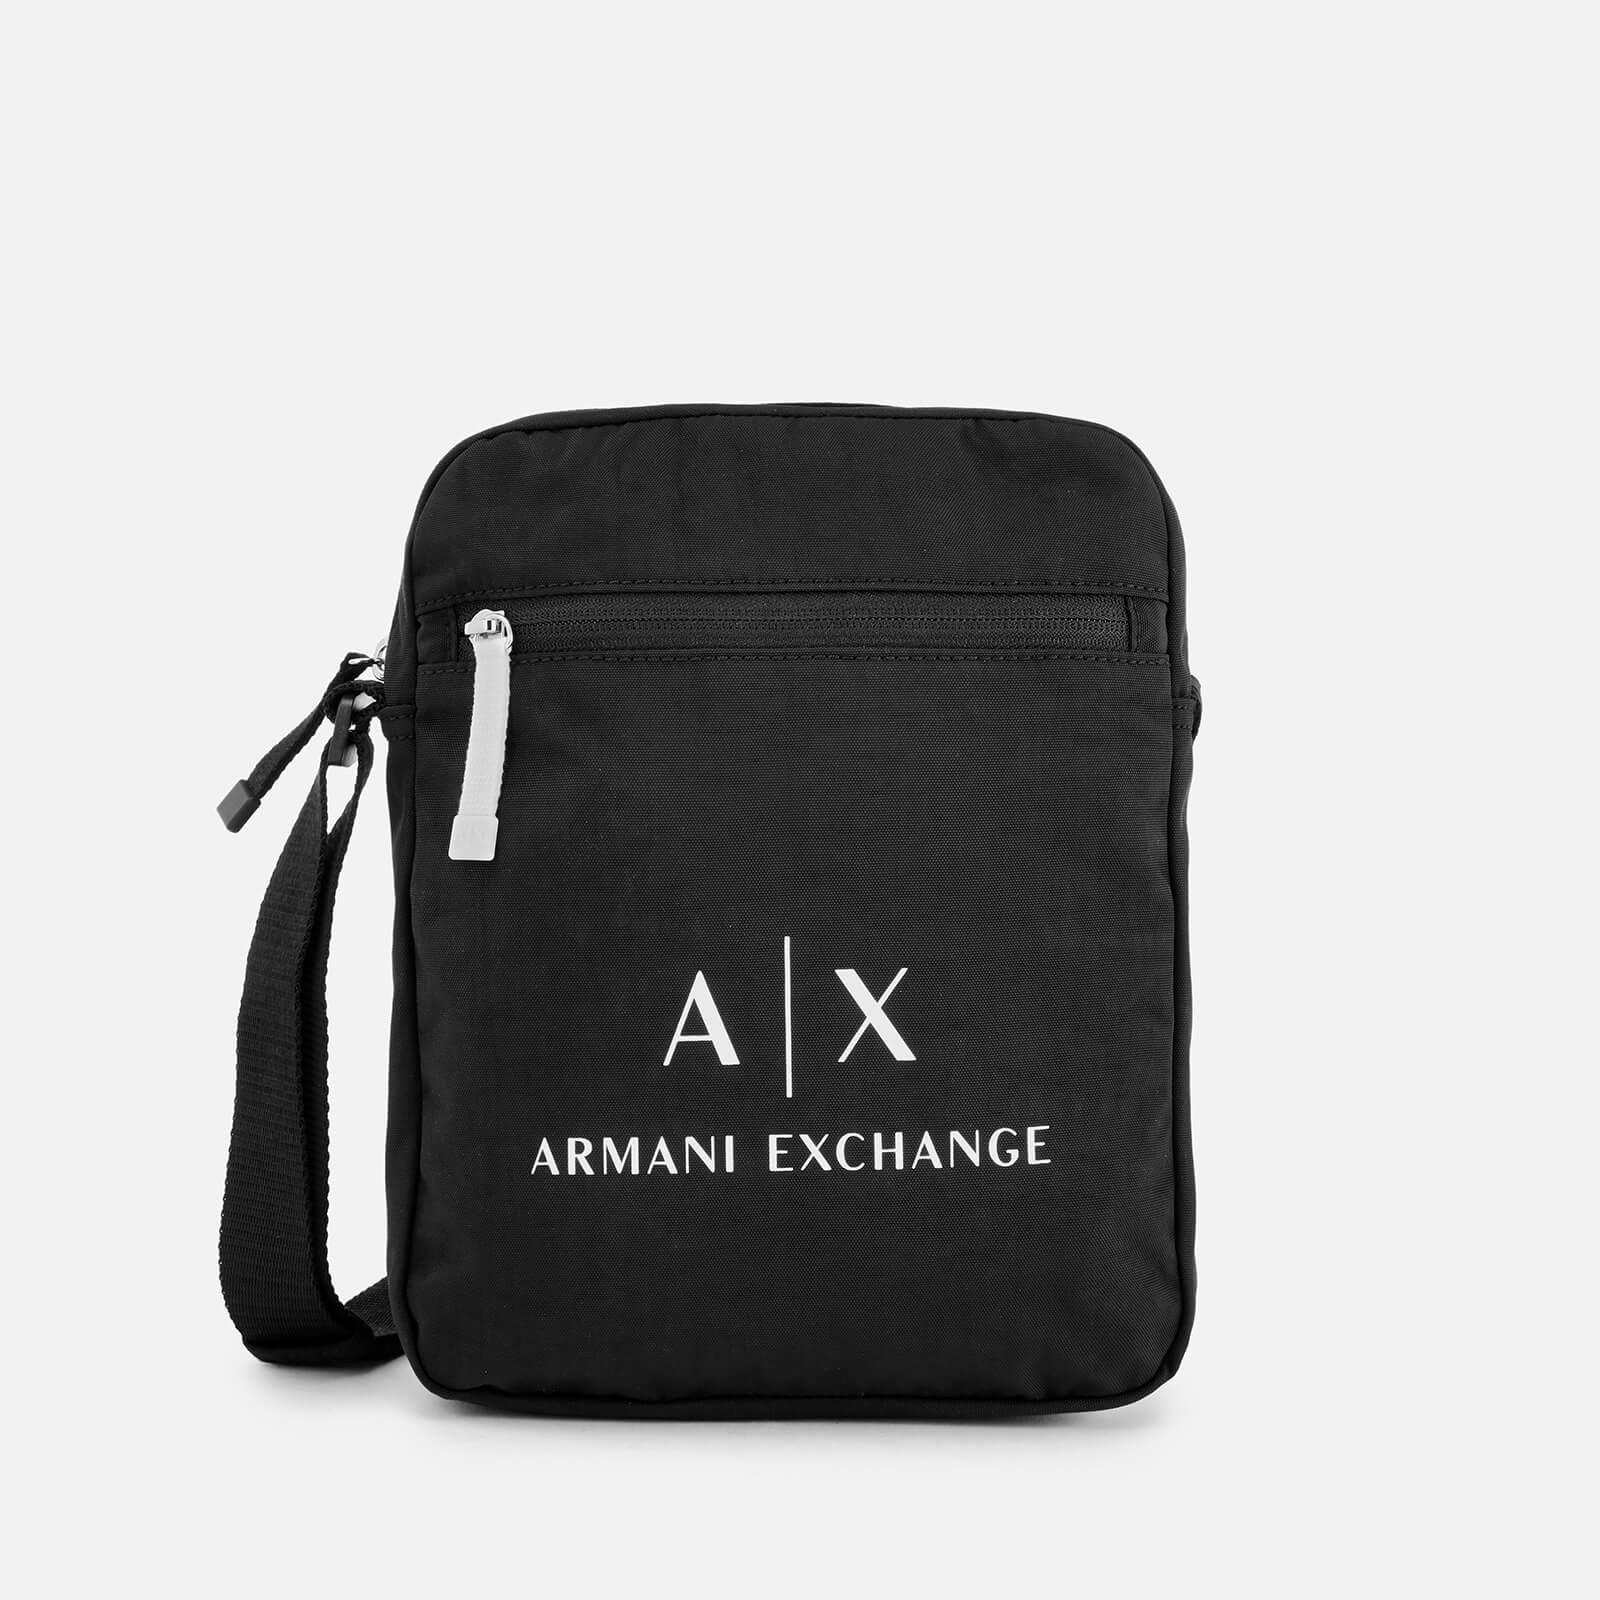 armani exchange side bag